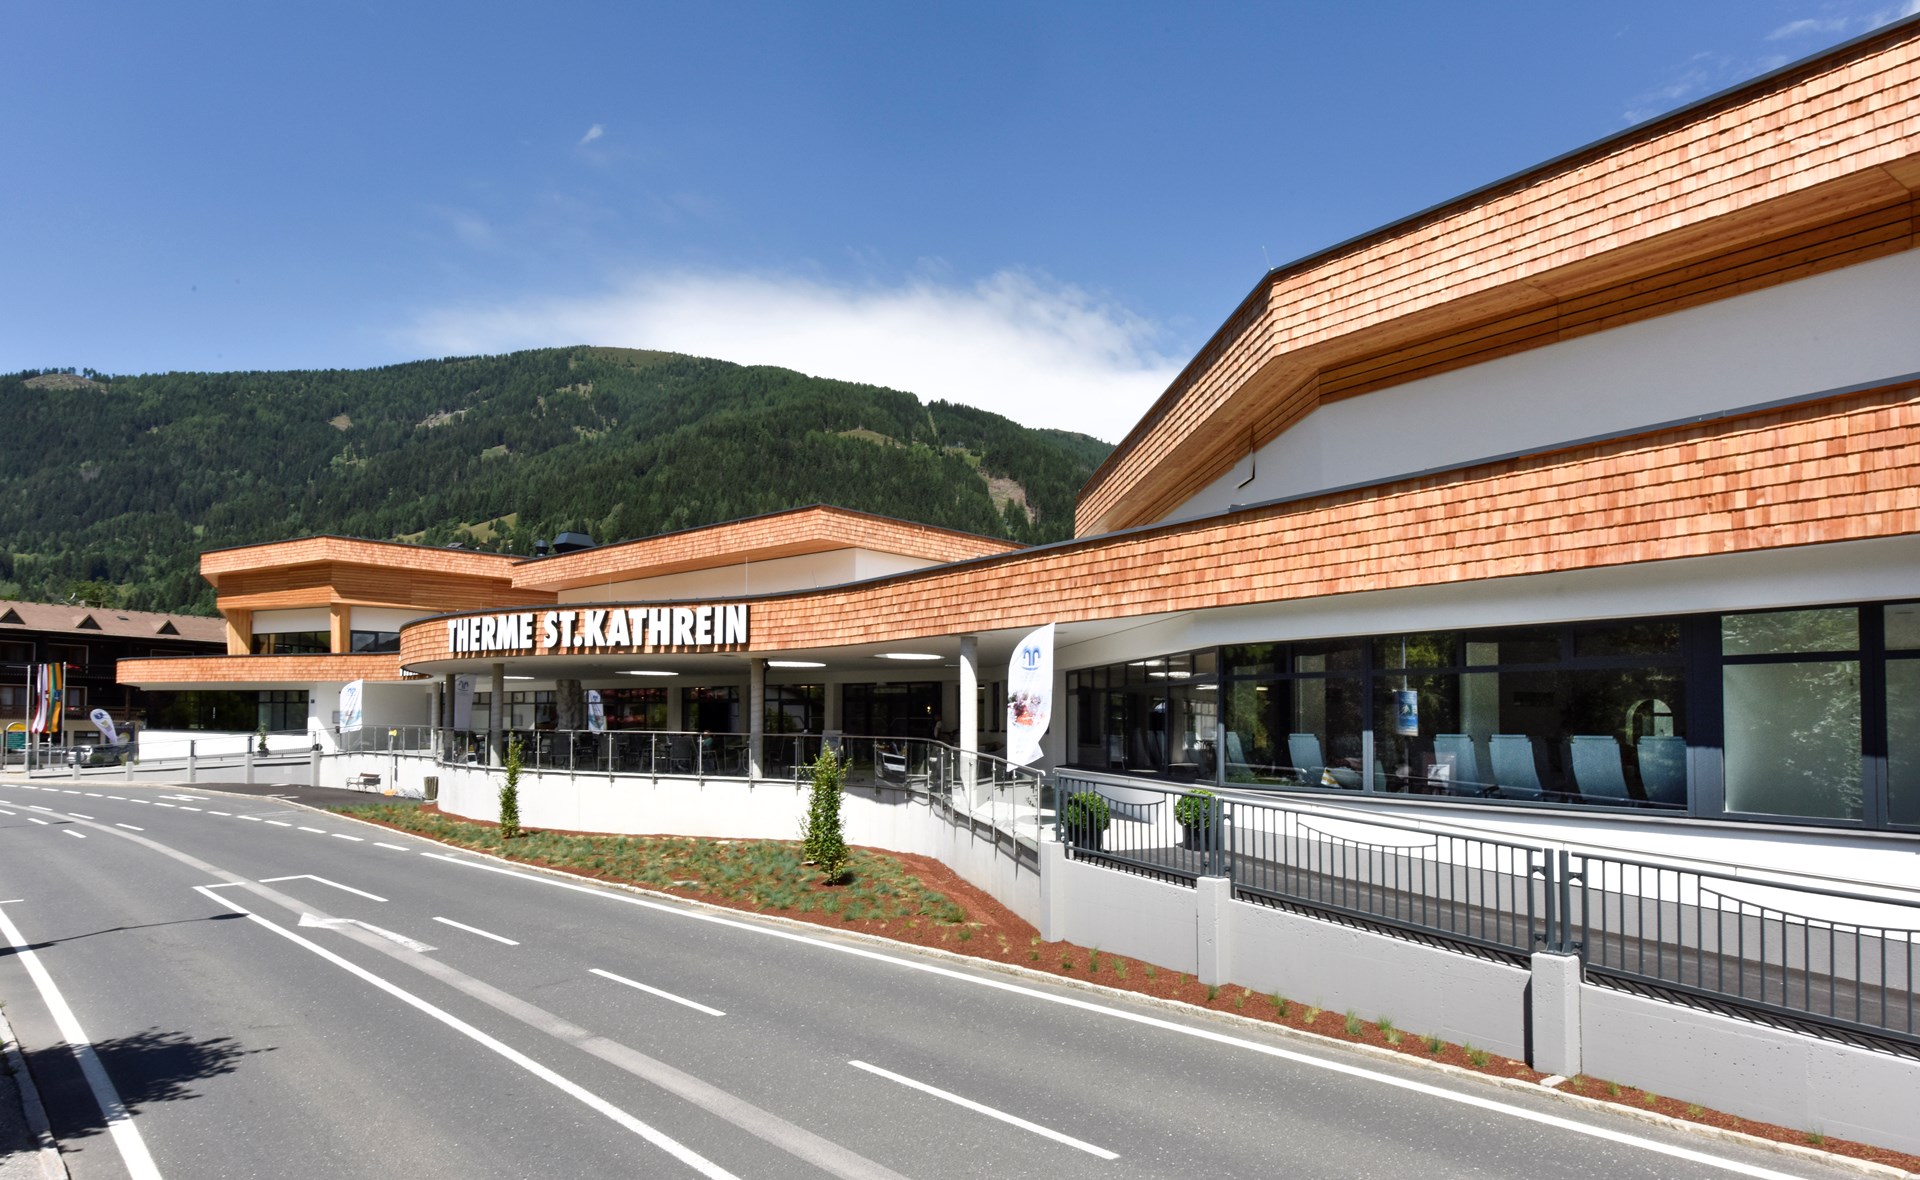 Therme St. Kathrein Betriebs GmbH